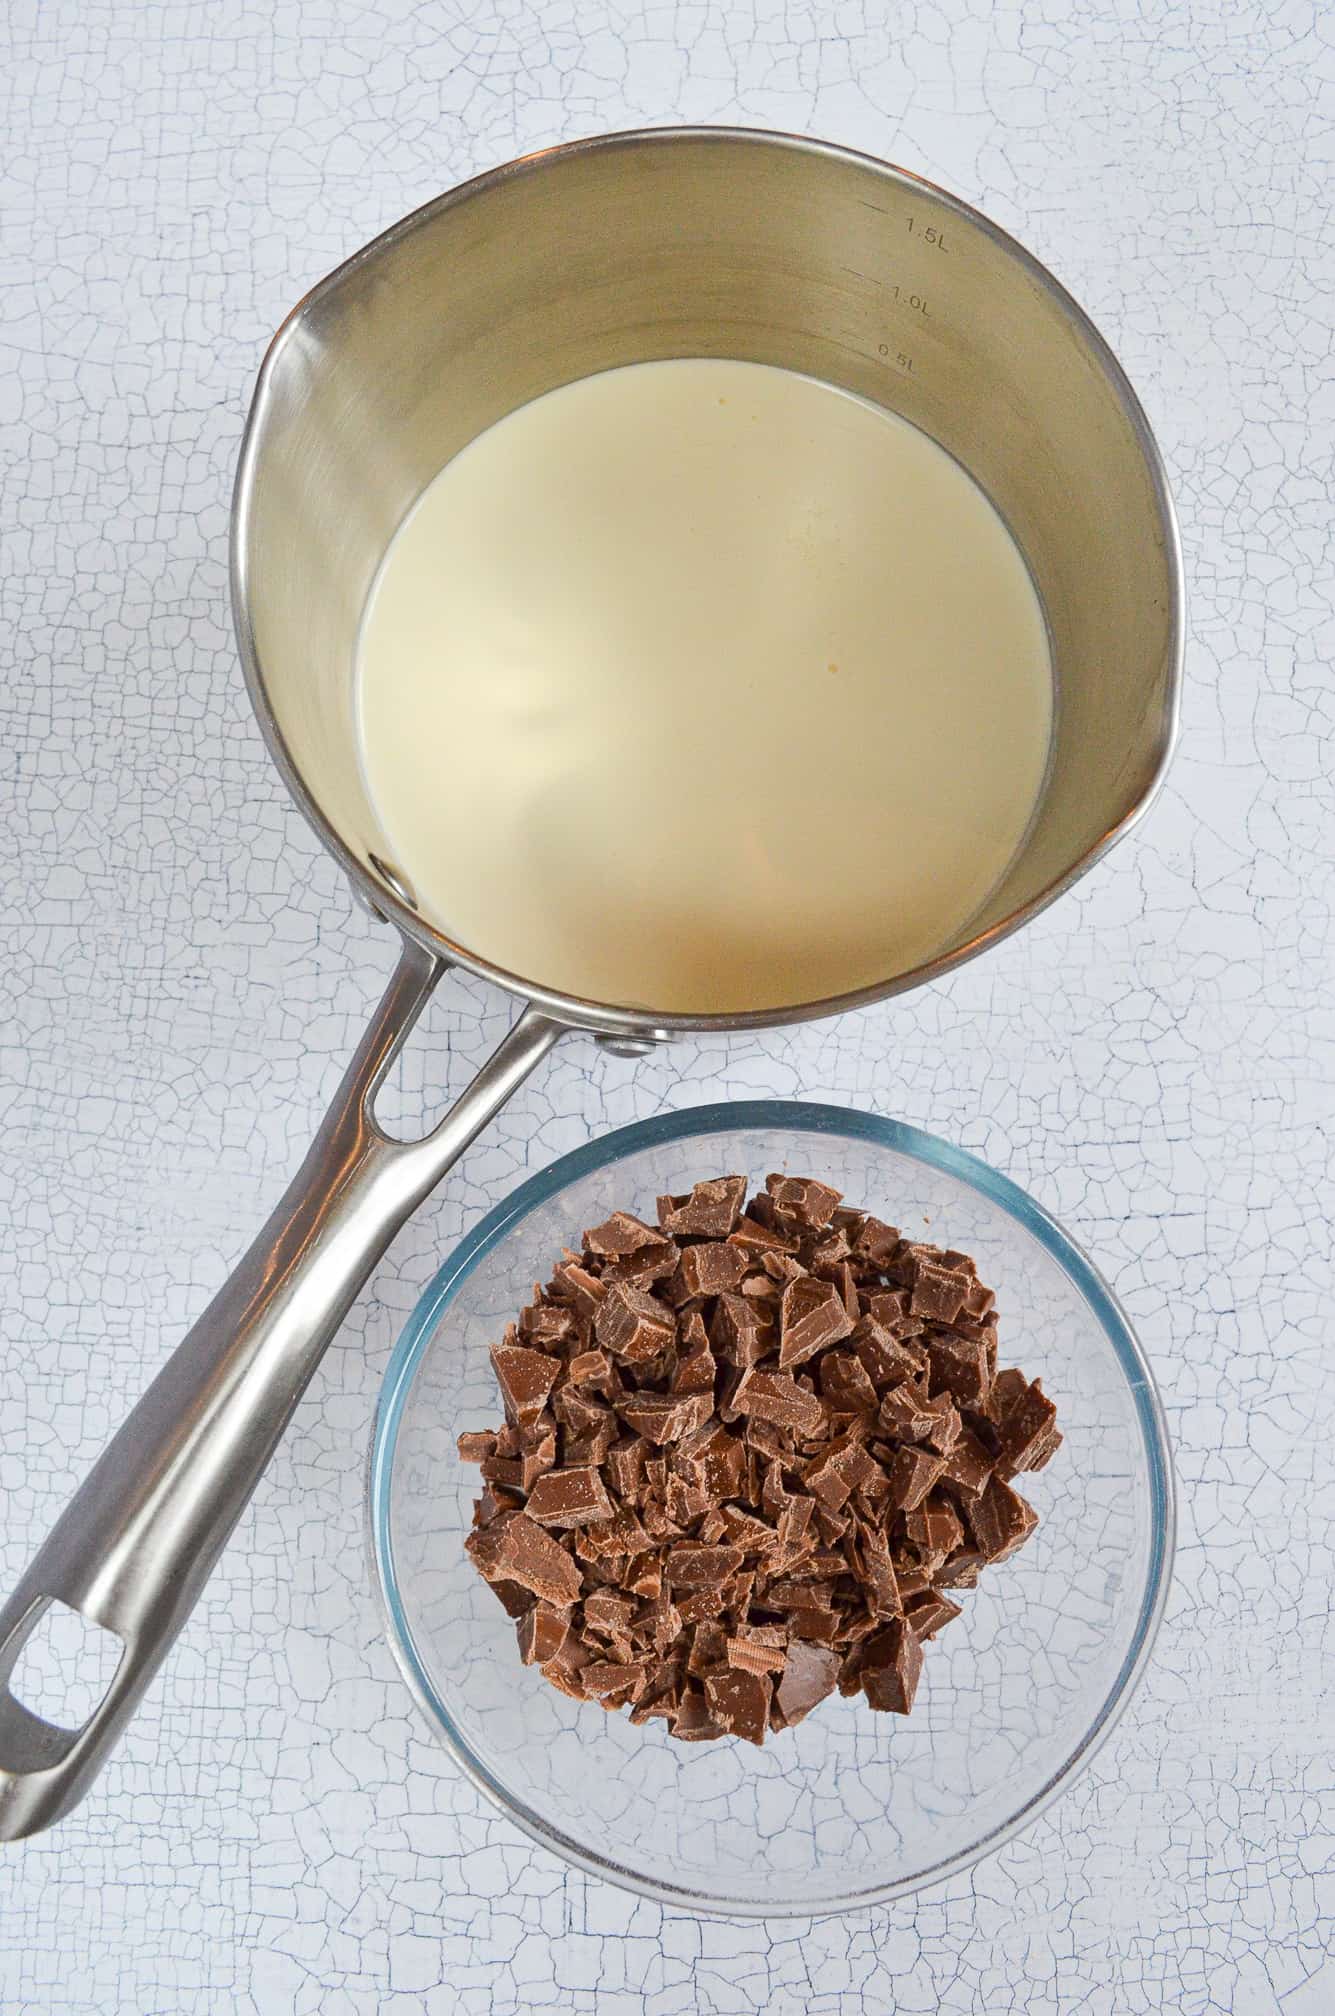 cream and chopped milk chocolate for ganache